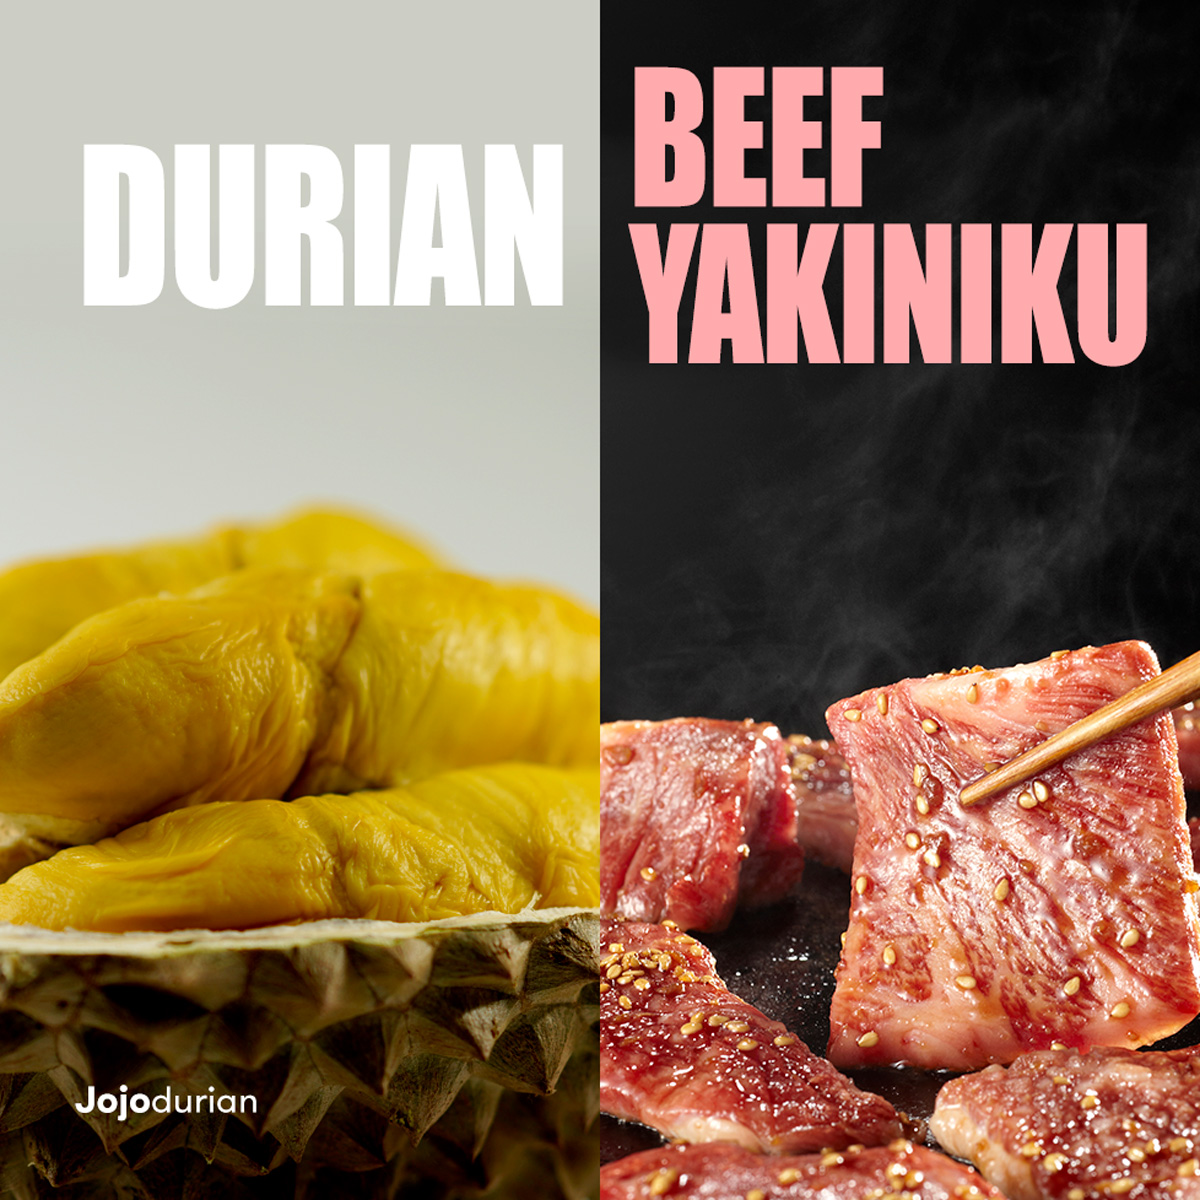 Meal Replacement: Durian vs Beef Yakiniku